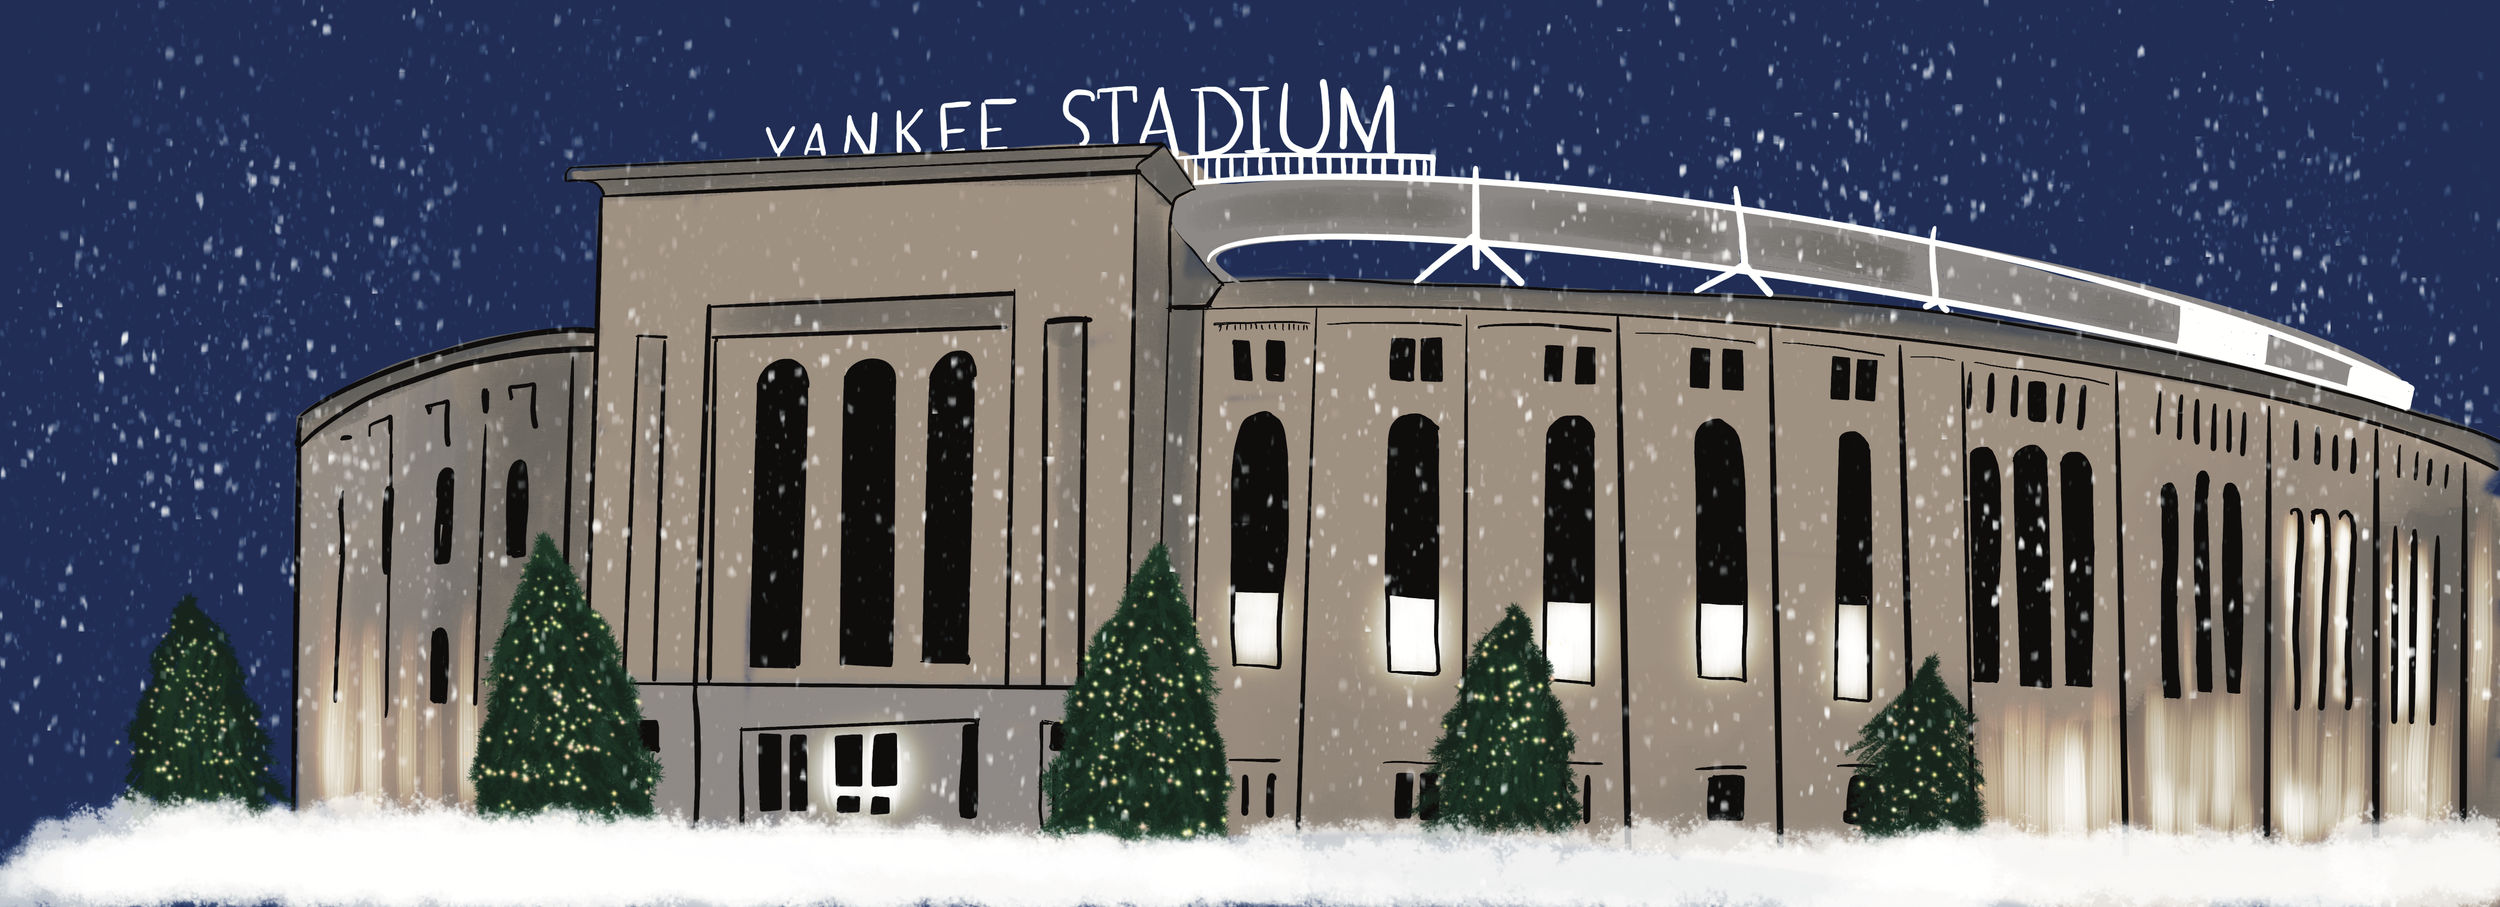 Yankee stadium.png